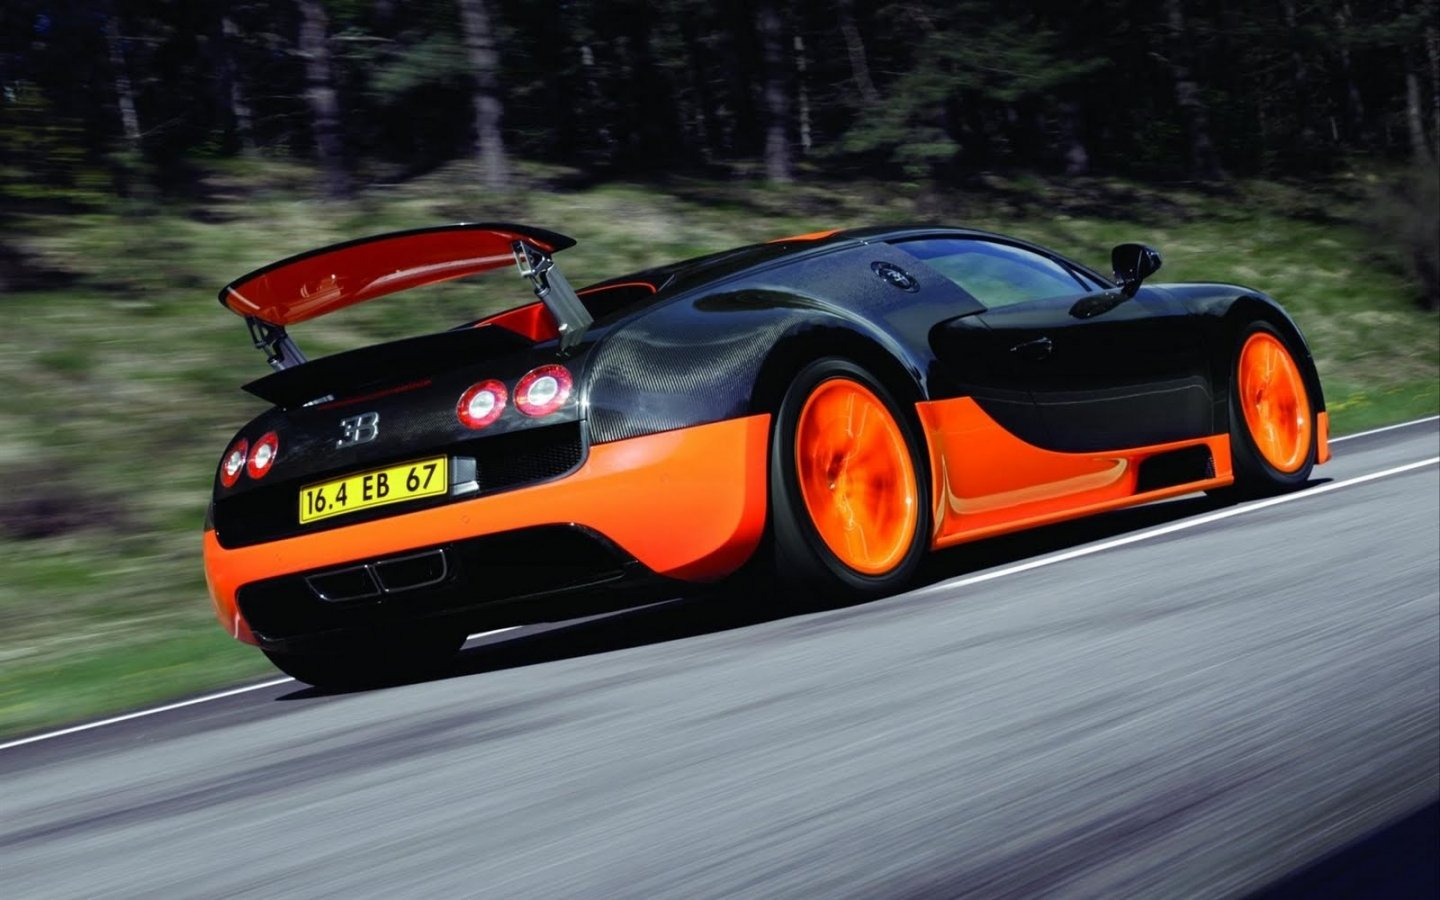 Супер быстрые машины. Бугатти Вейрон 16 4 super Sport. Bugatti Veyron 16.4 super Sport 2010. Bugatti Veyron 16.4. Bugatti Veyron 16.4 Grand Sport.